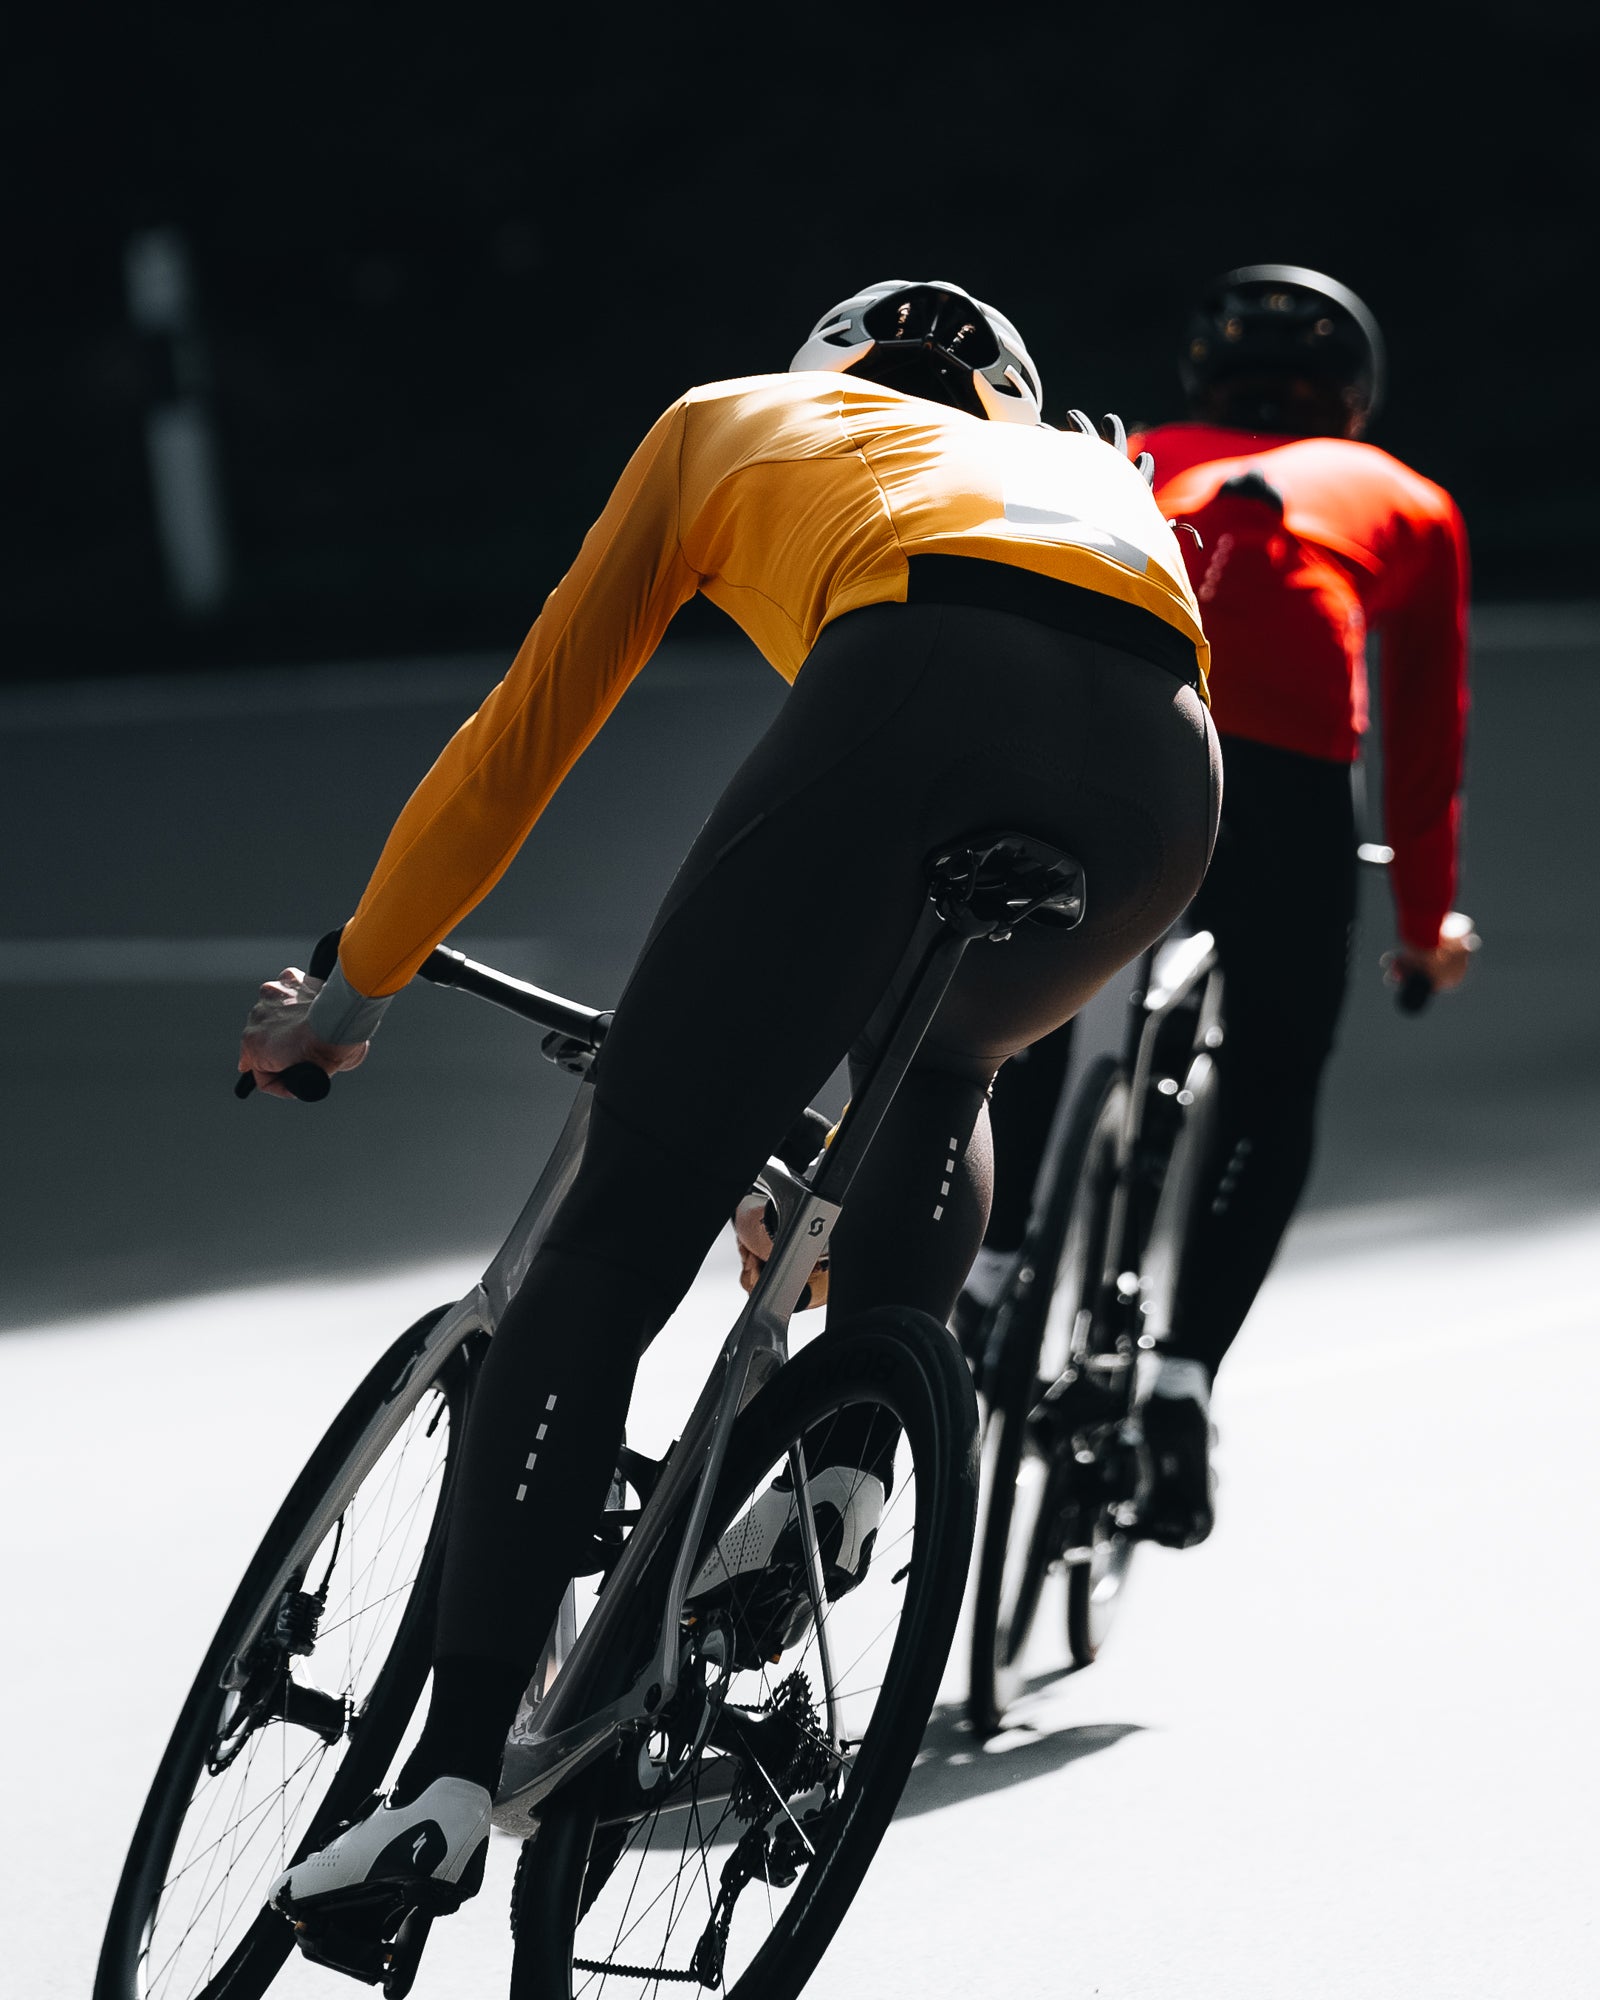 LAAVA High-Performance Compression Bib Shorts – RAGEN · Triathlon, Cycling  & Running Performance Apparel